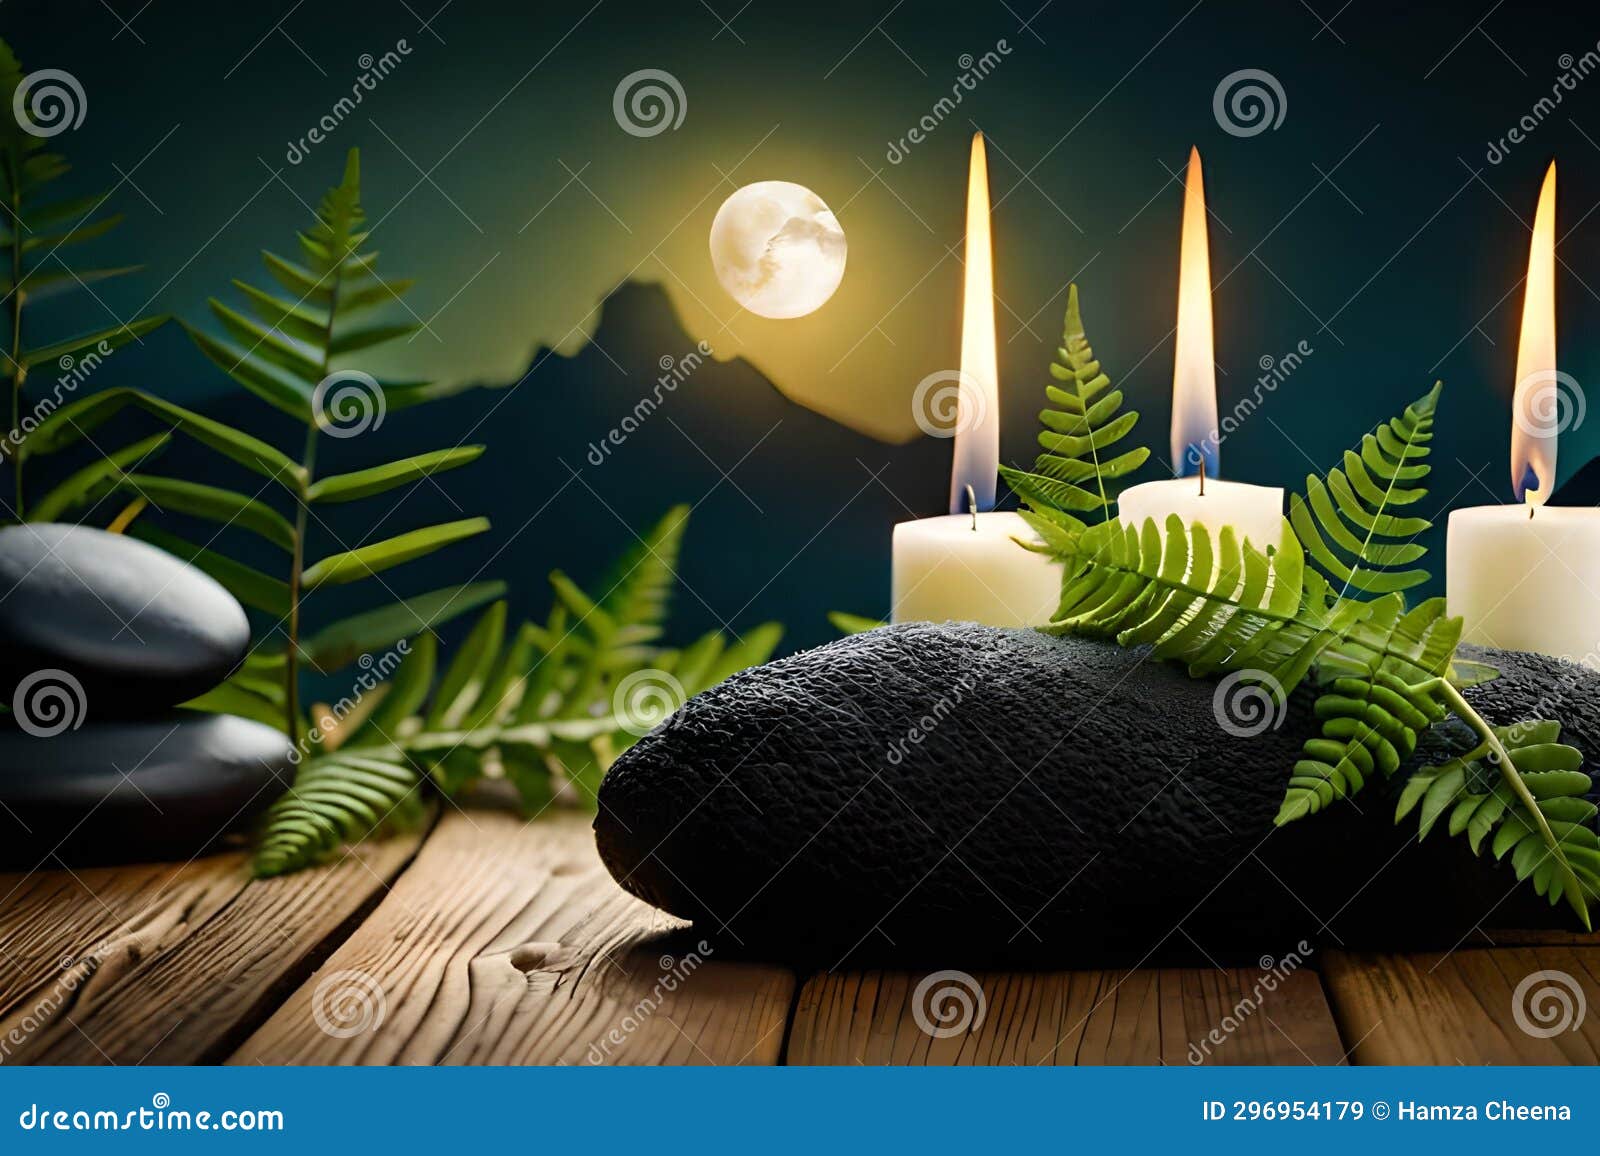 candles with zen stones